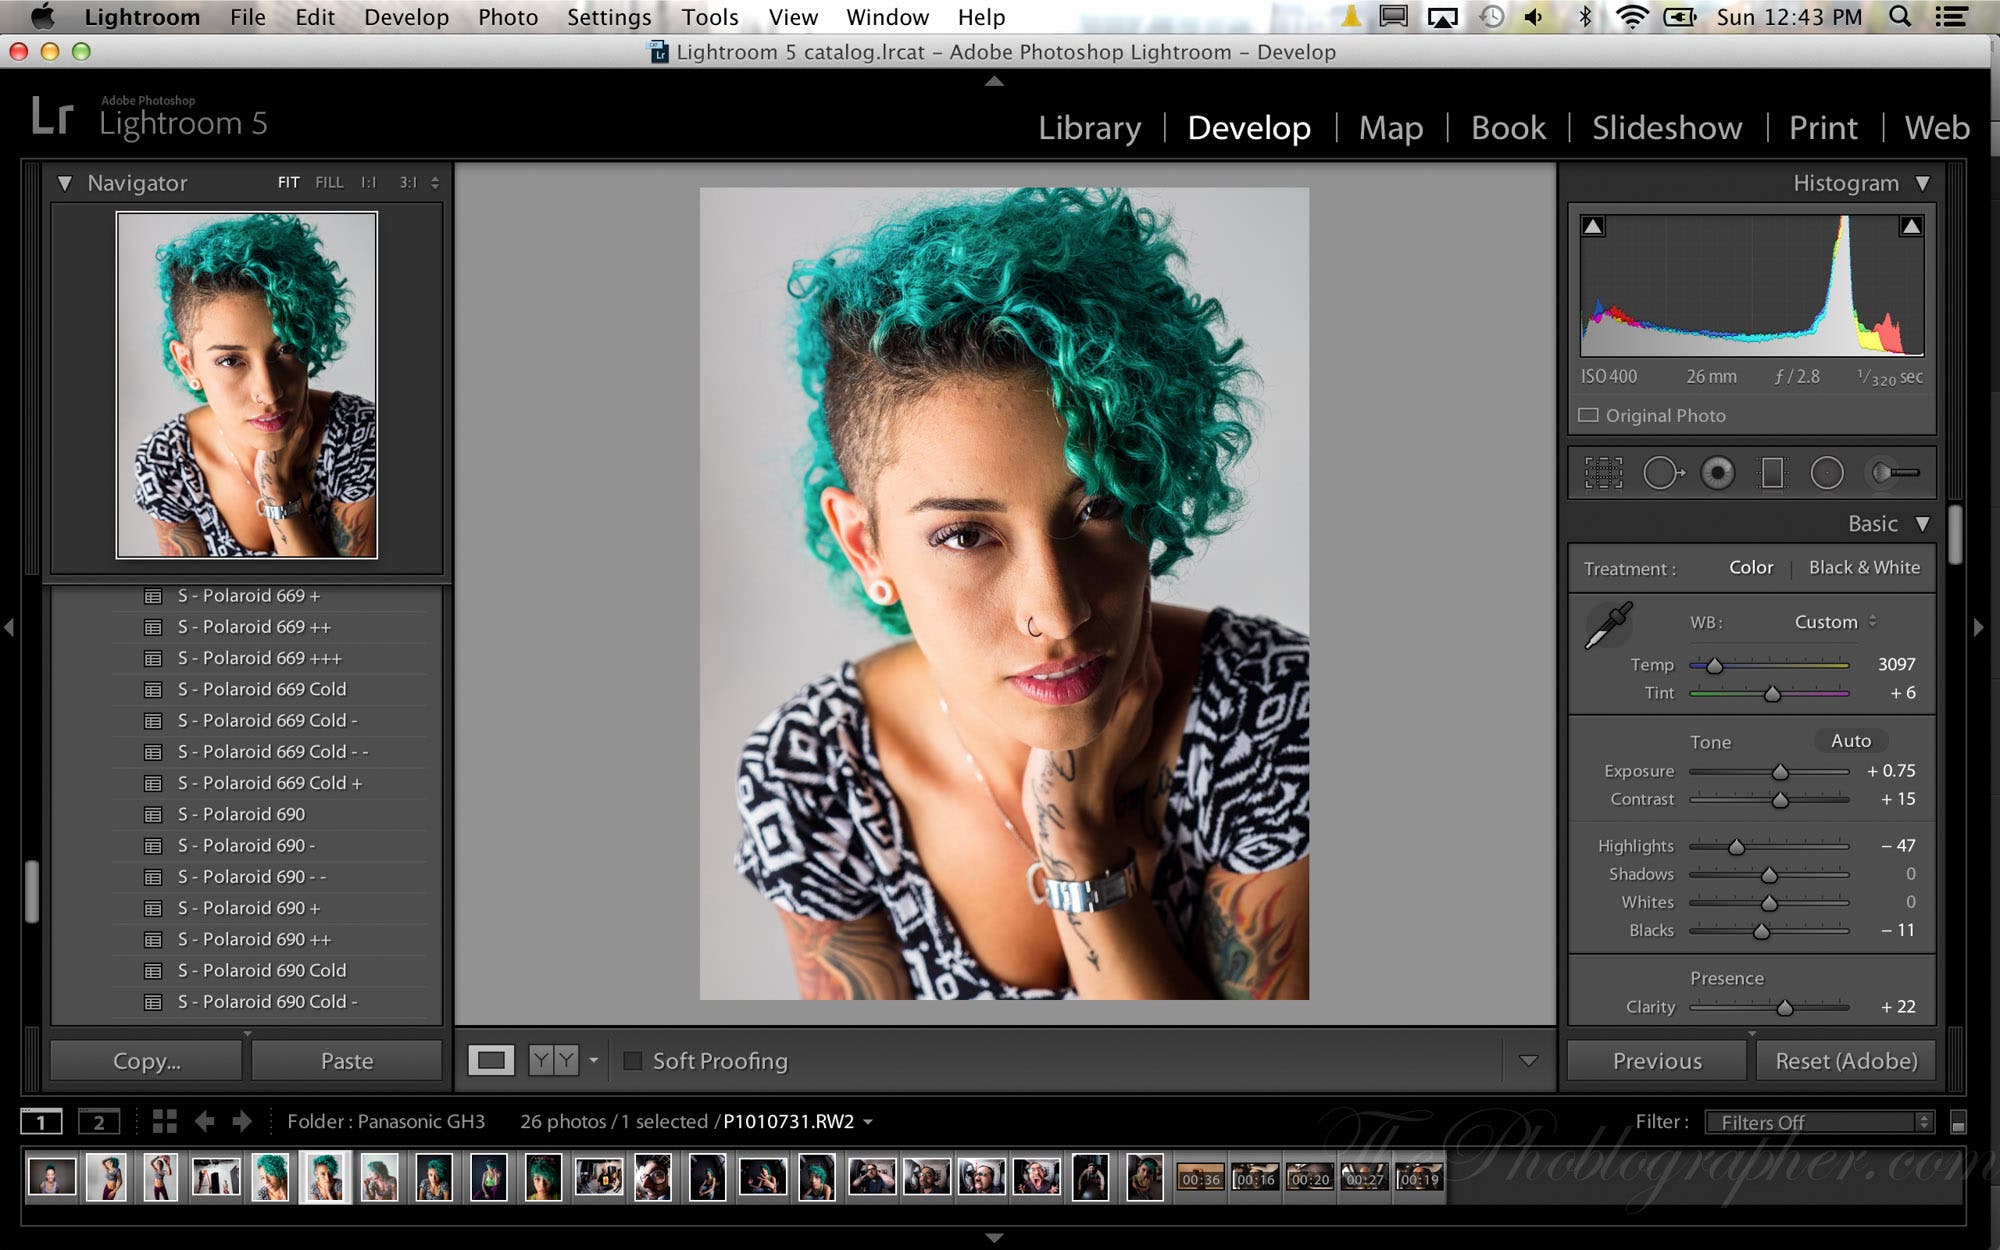 Adobe Photoshop Lightroom 5.3